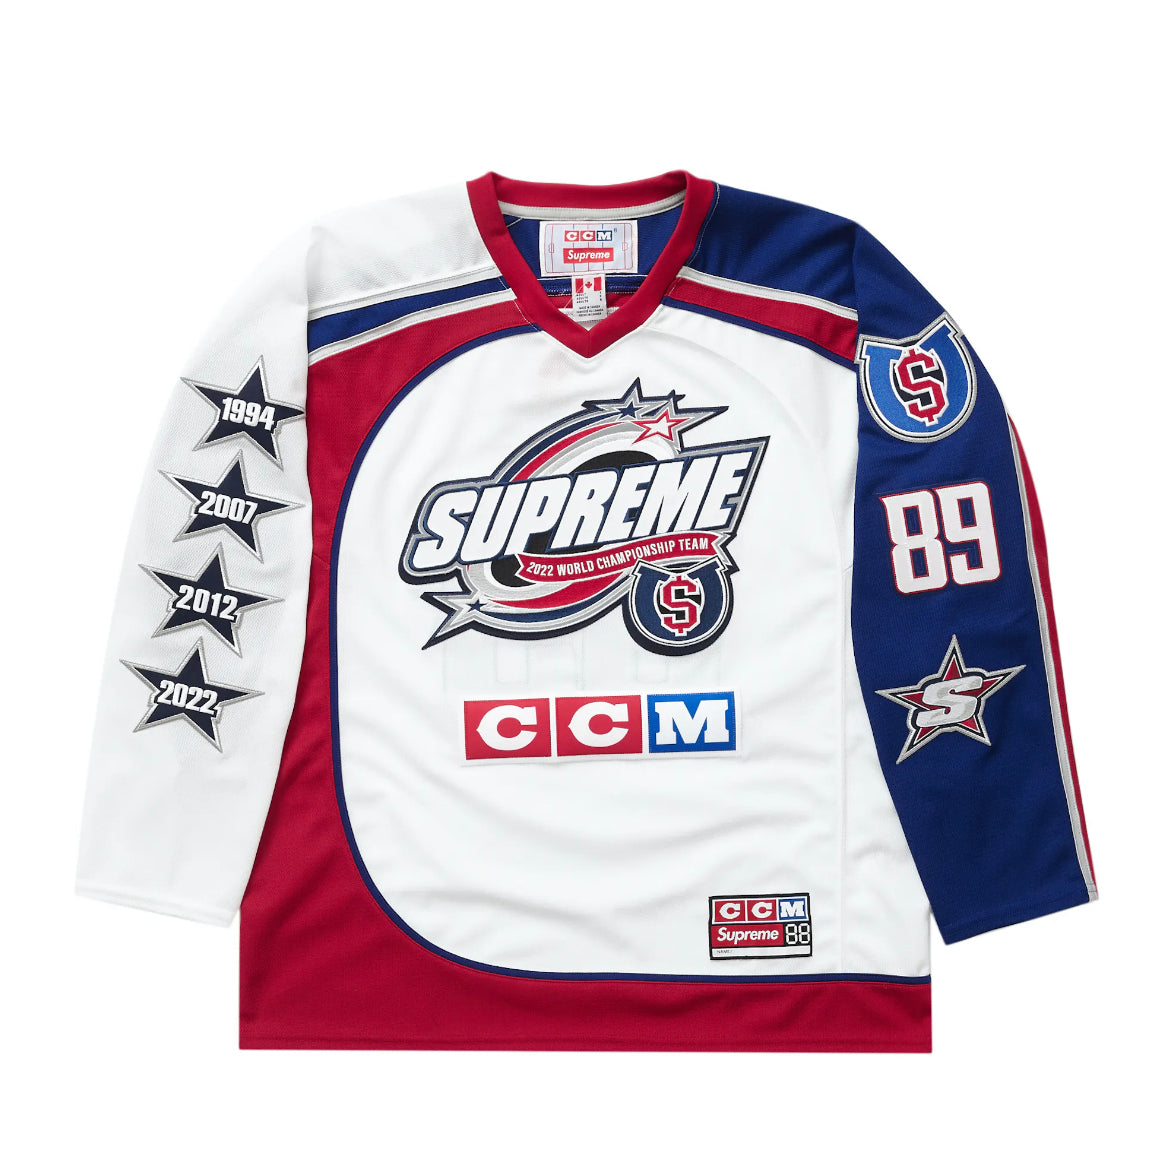 Supreme CCM All Stars Hockey Jersey “White” | Request